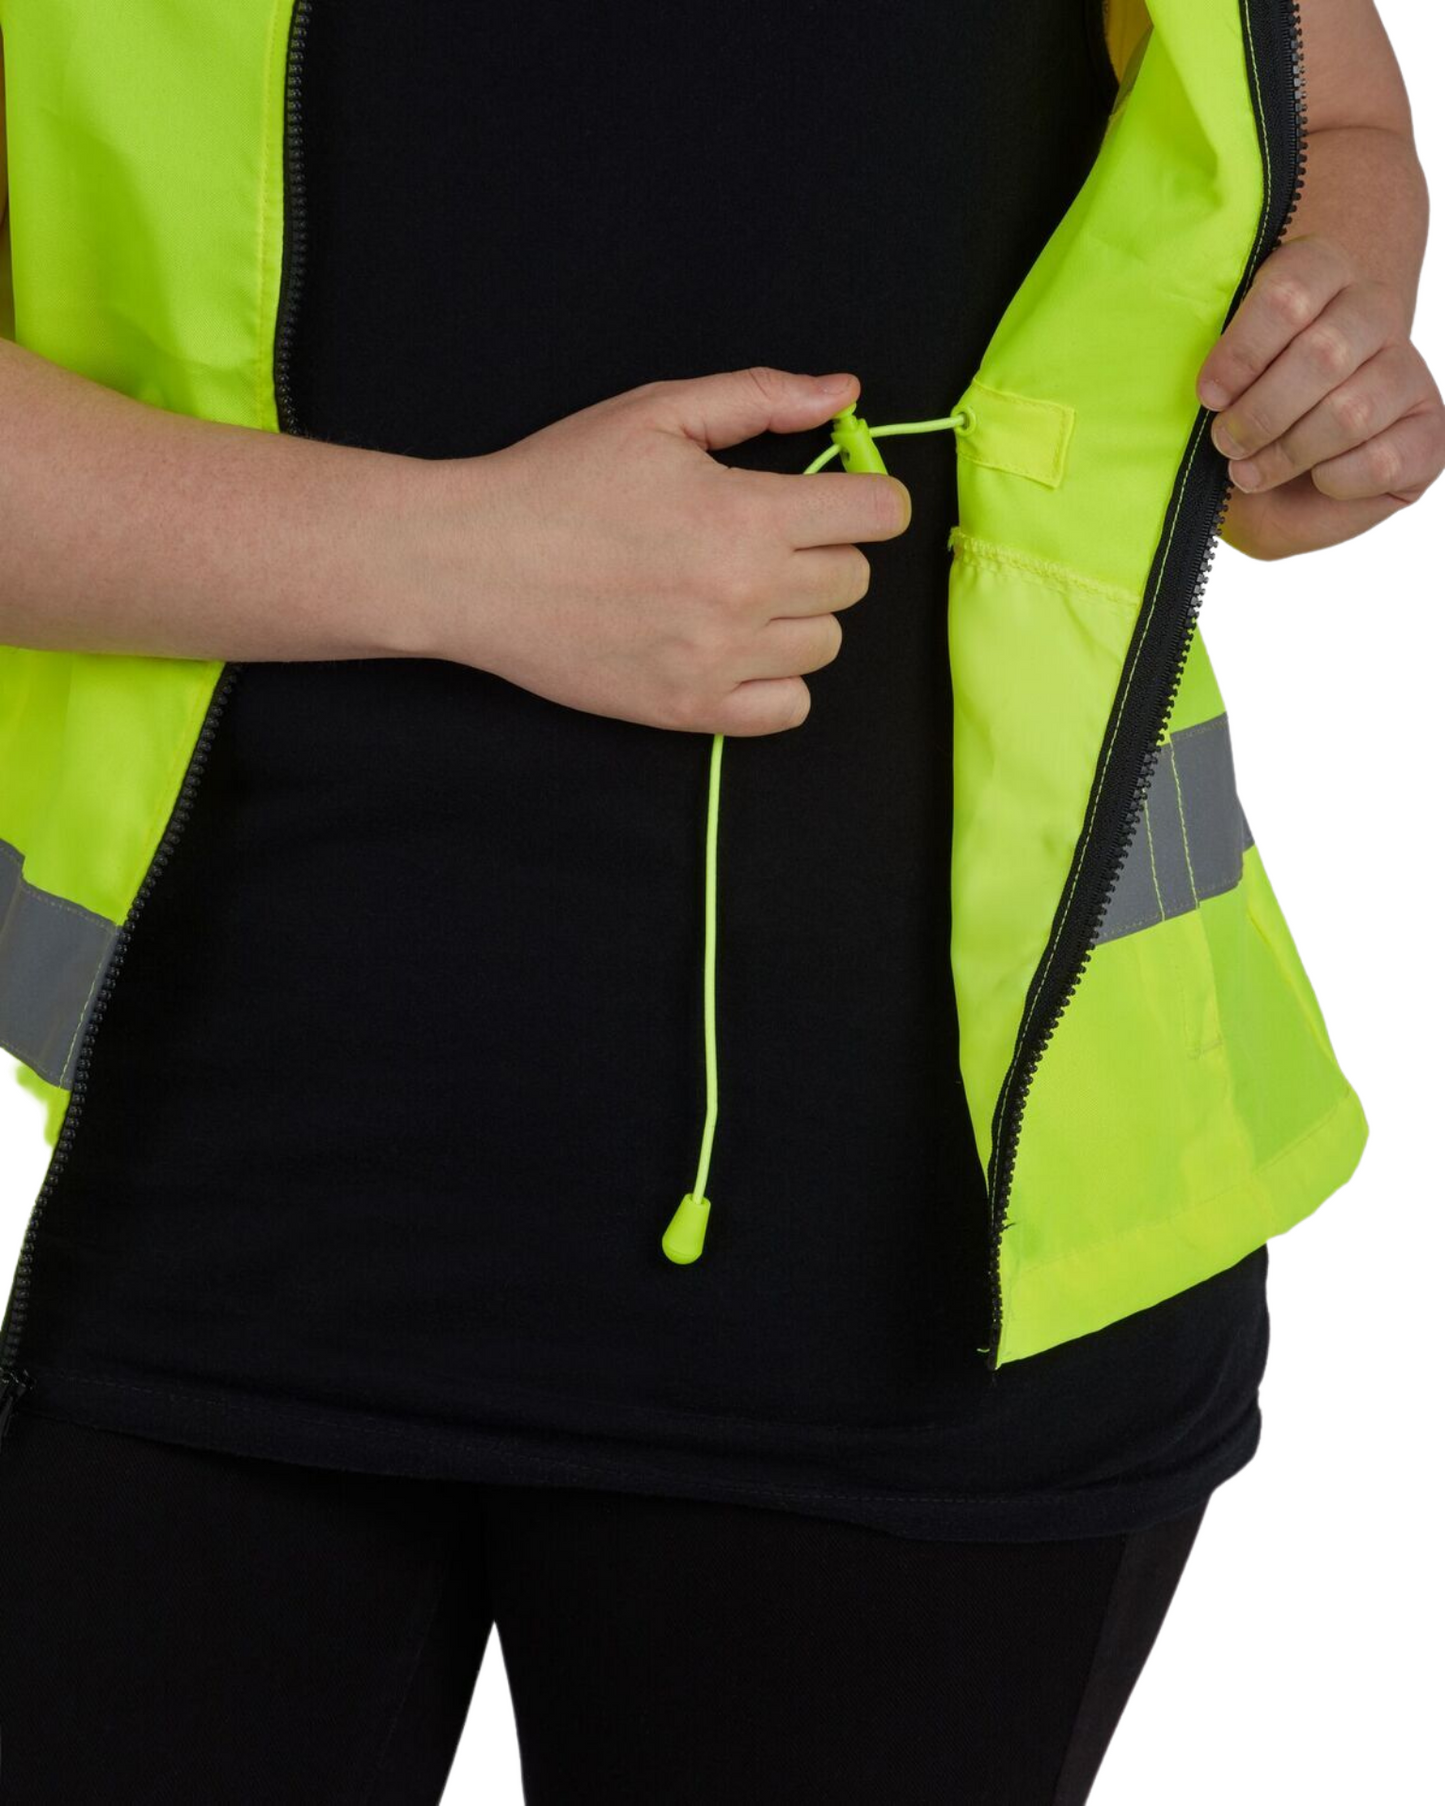 UHV662 HiVis Women's Nylon Vest with Pockets